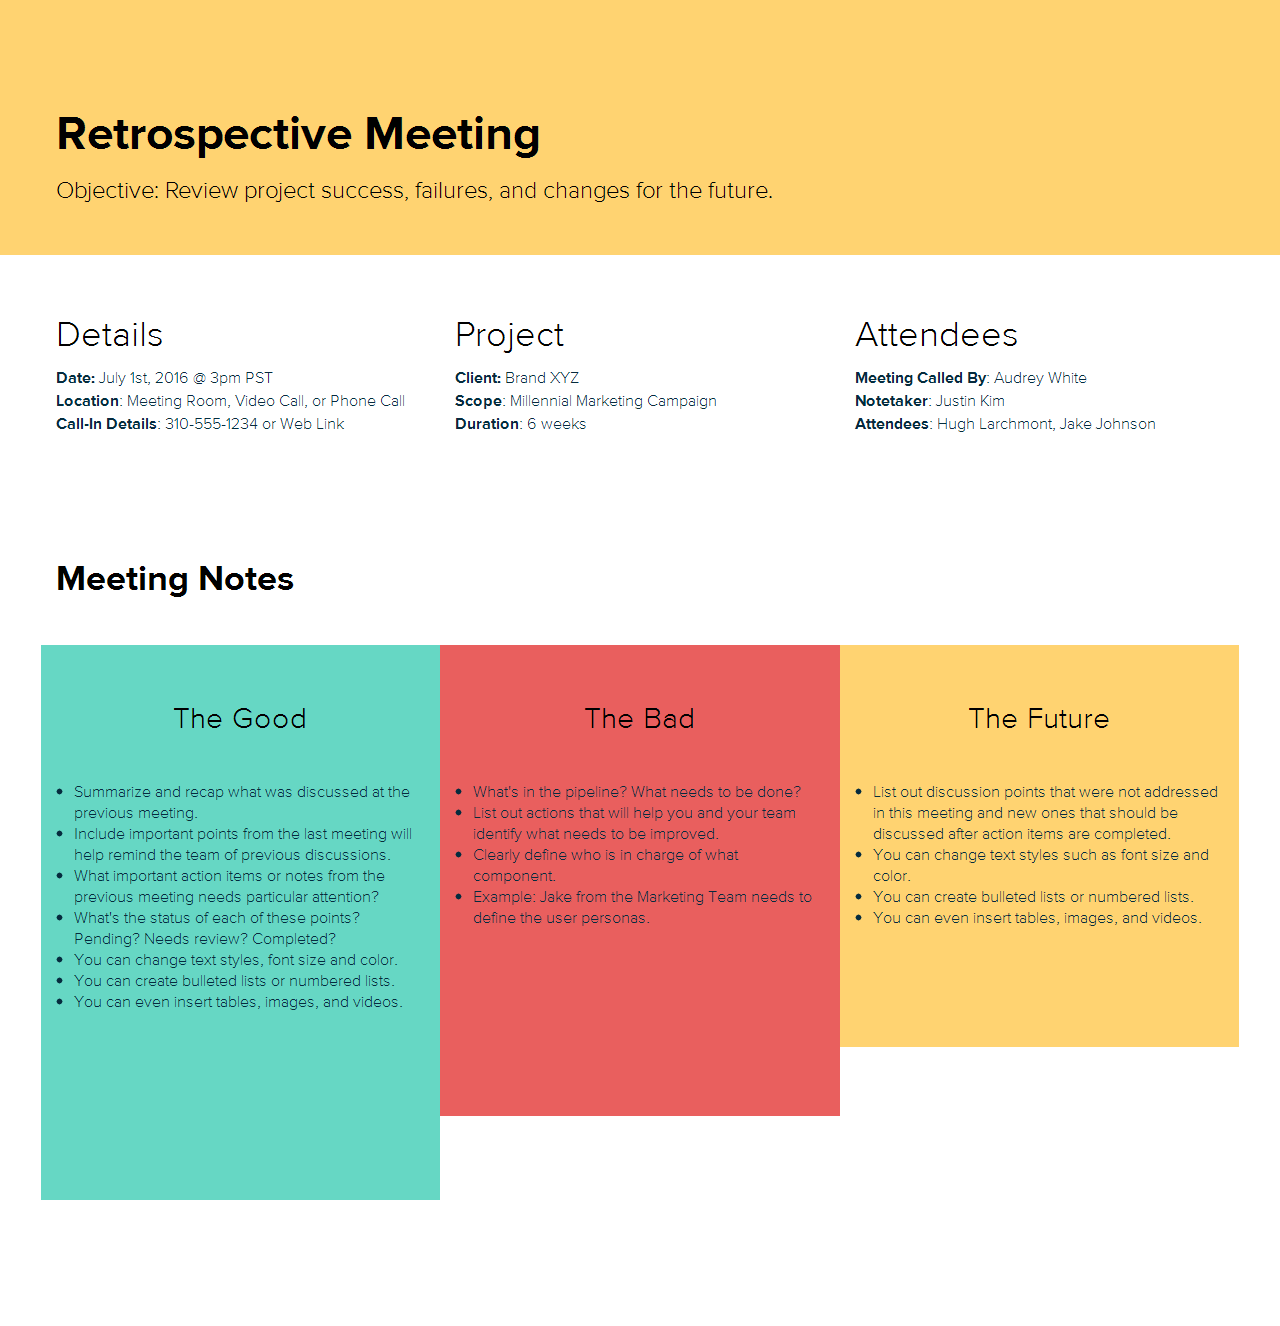 Retrospective Meeting Agenda